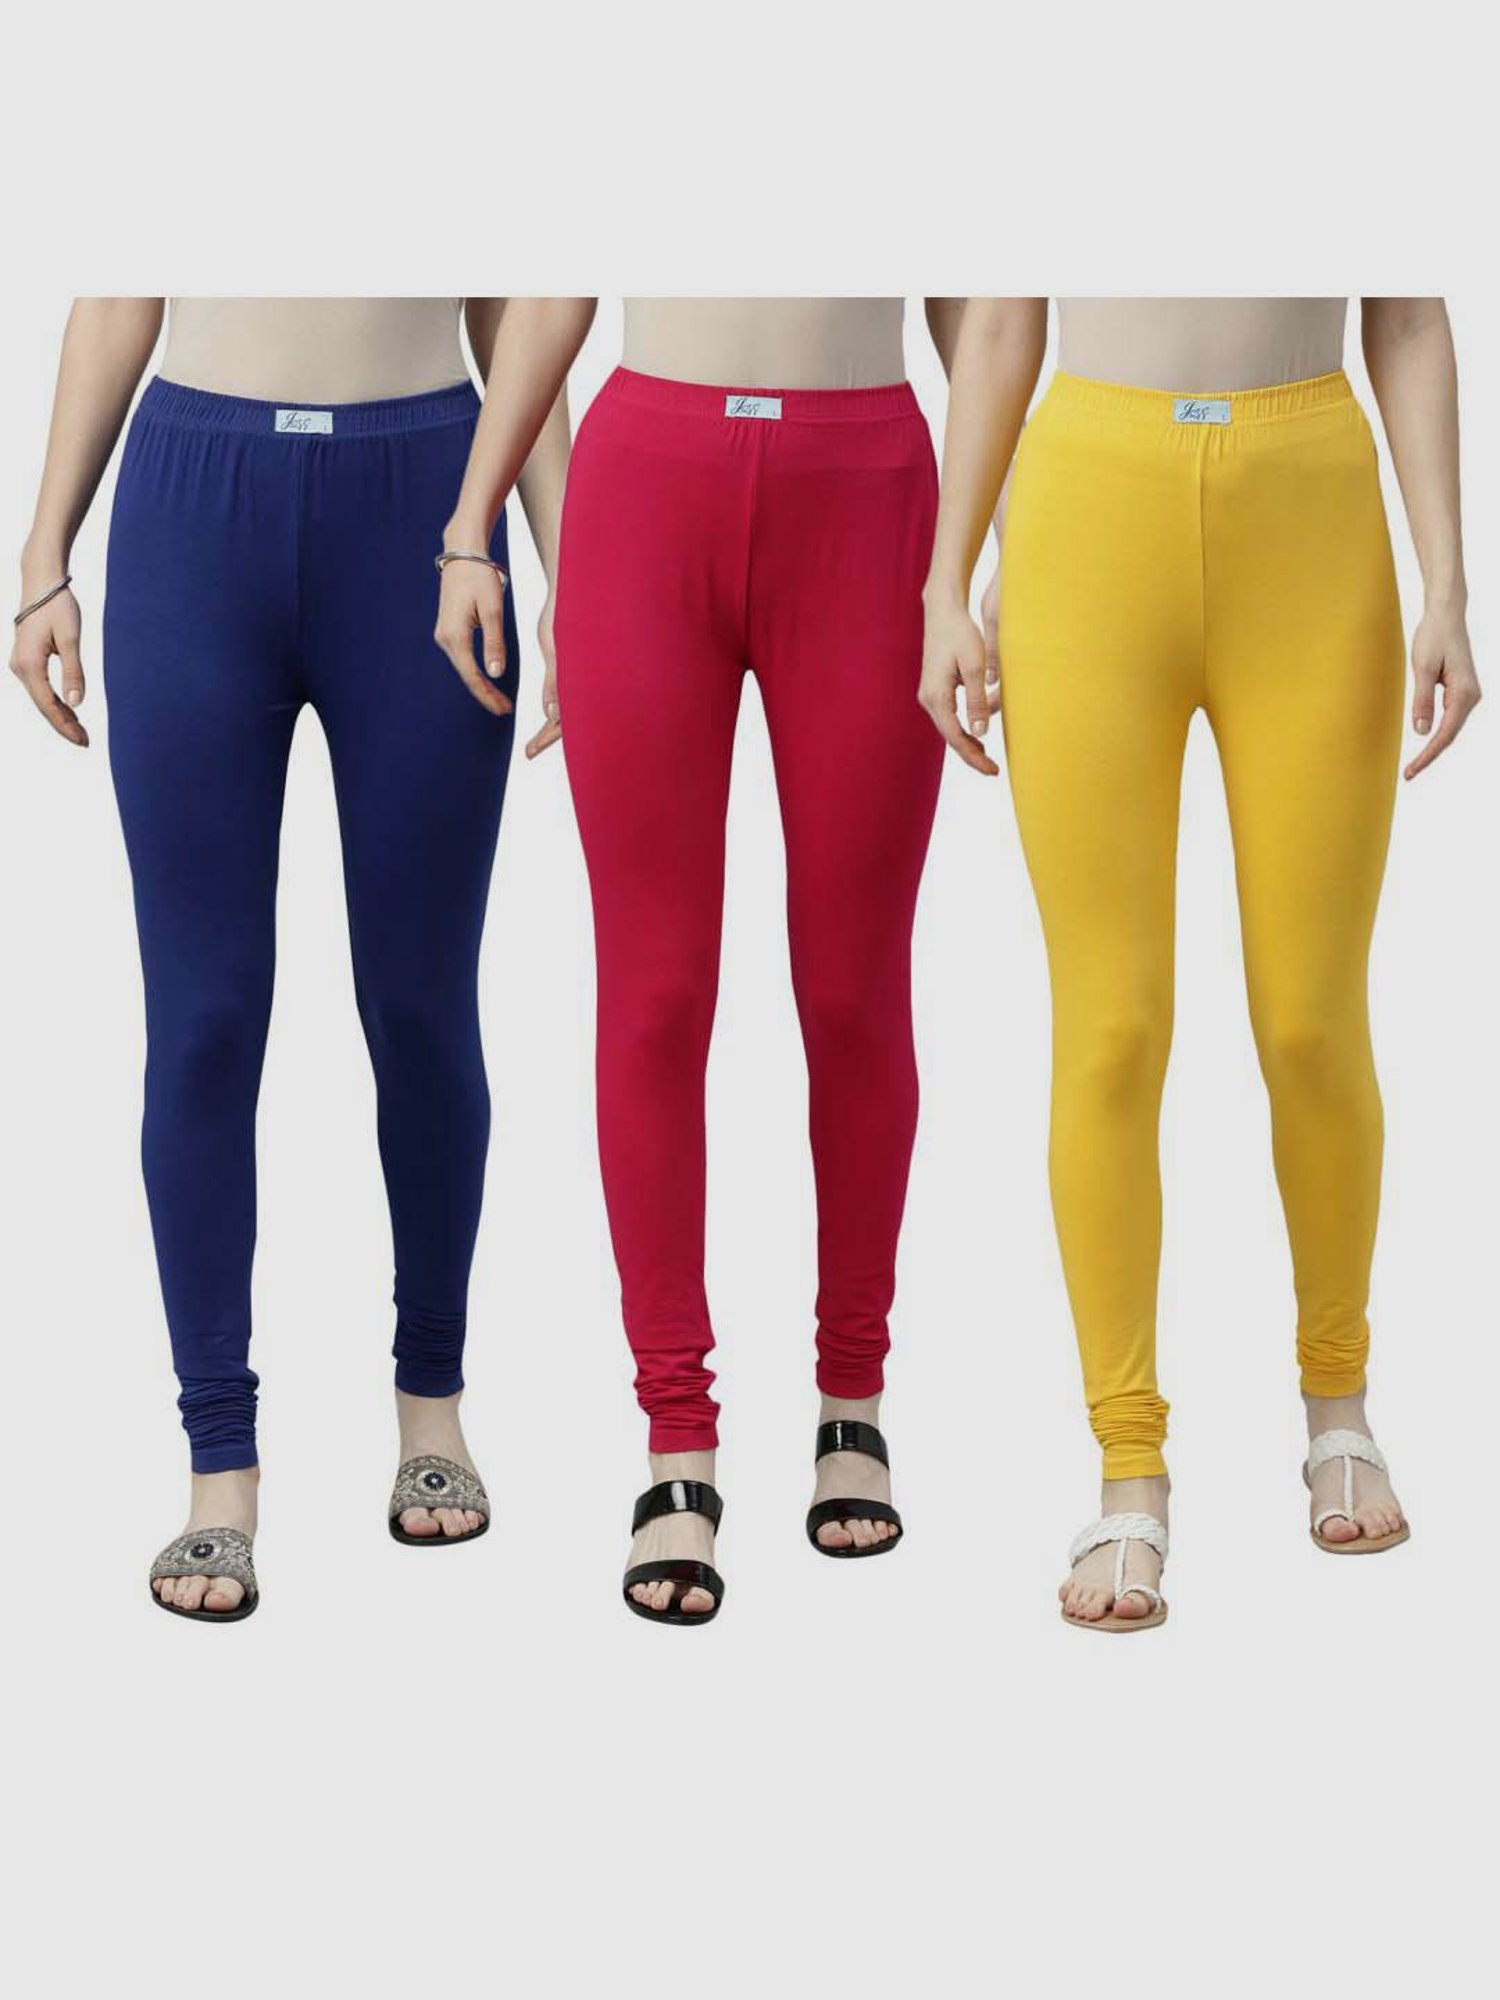 Buy Online Jio Women's Leggings (Pack of 3 Multi Colour) at